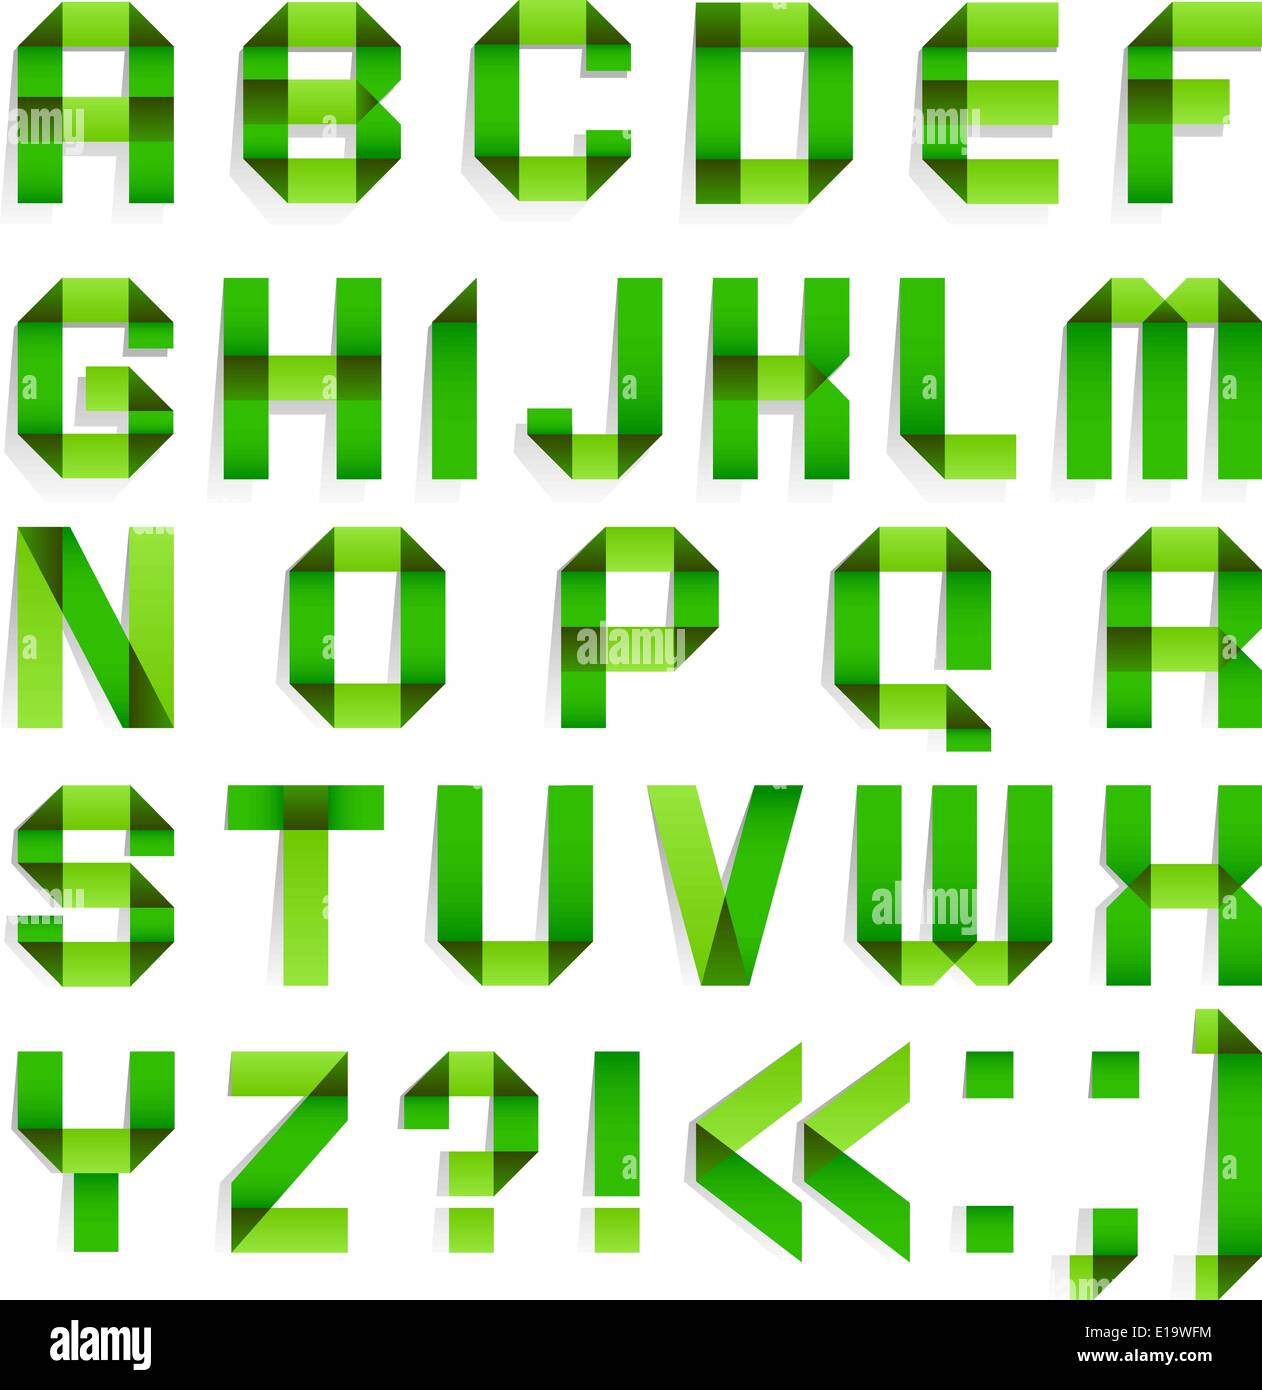 Alphabet Folded Paper Green Letters Roman Alphabet A B C D E F G H I J K L M N O P Q R S T U V W X